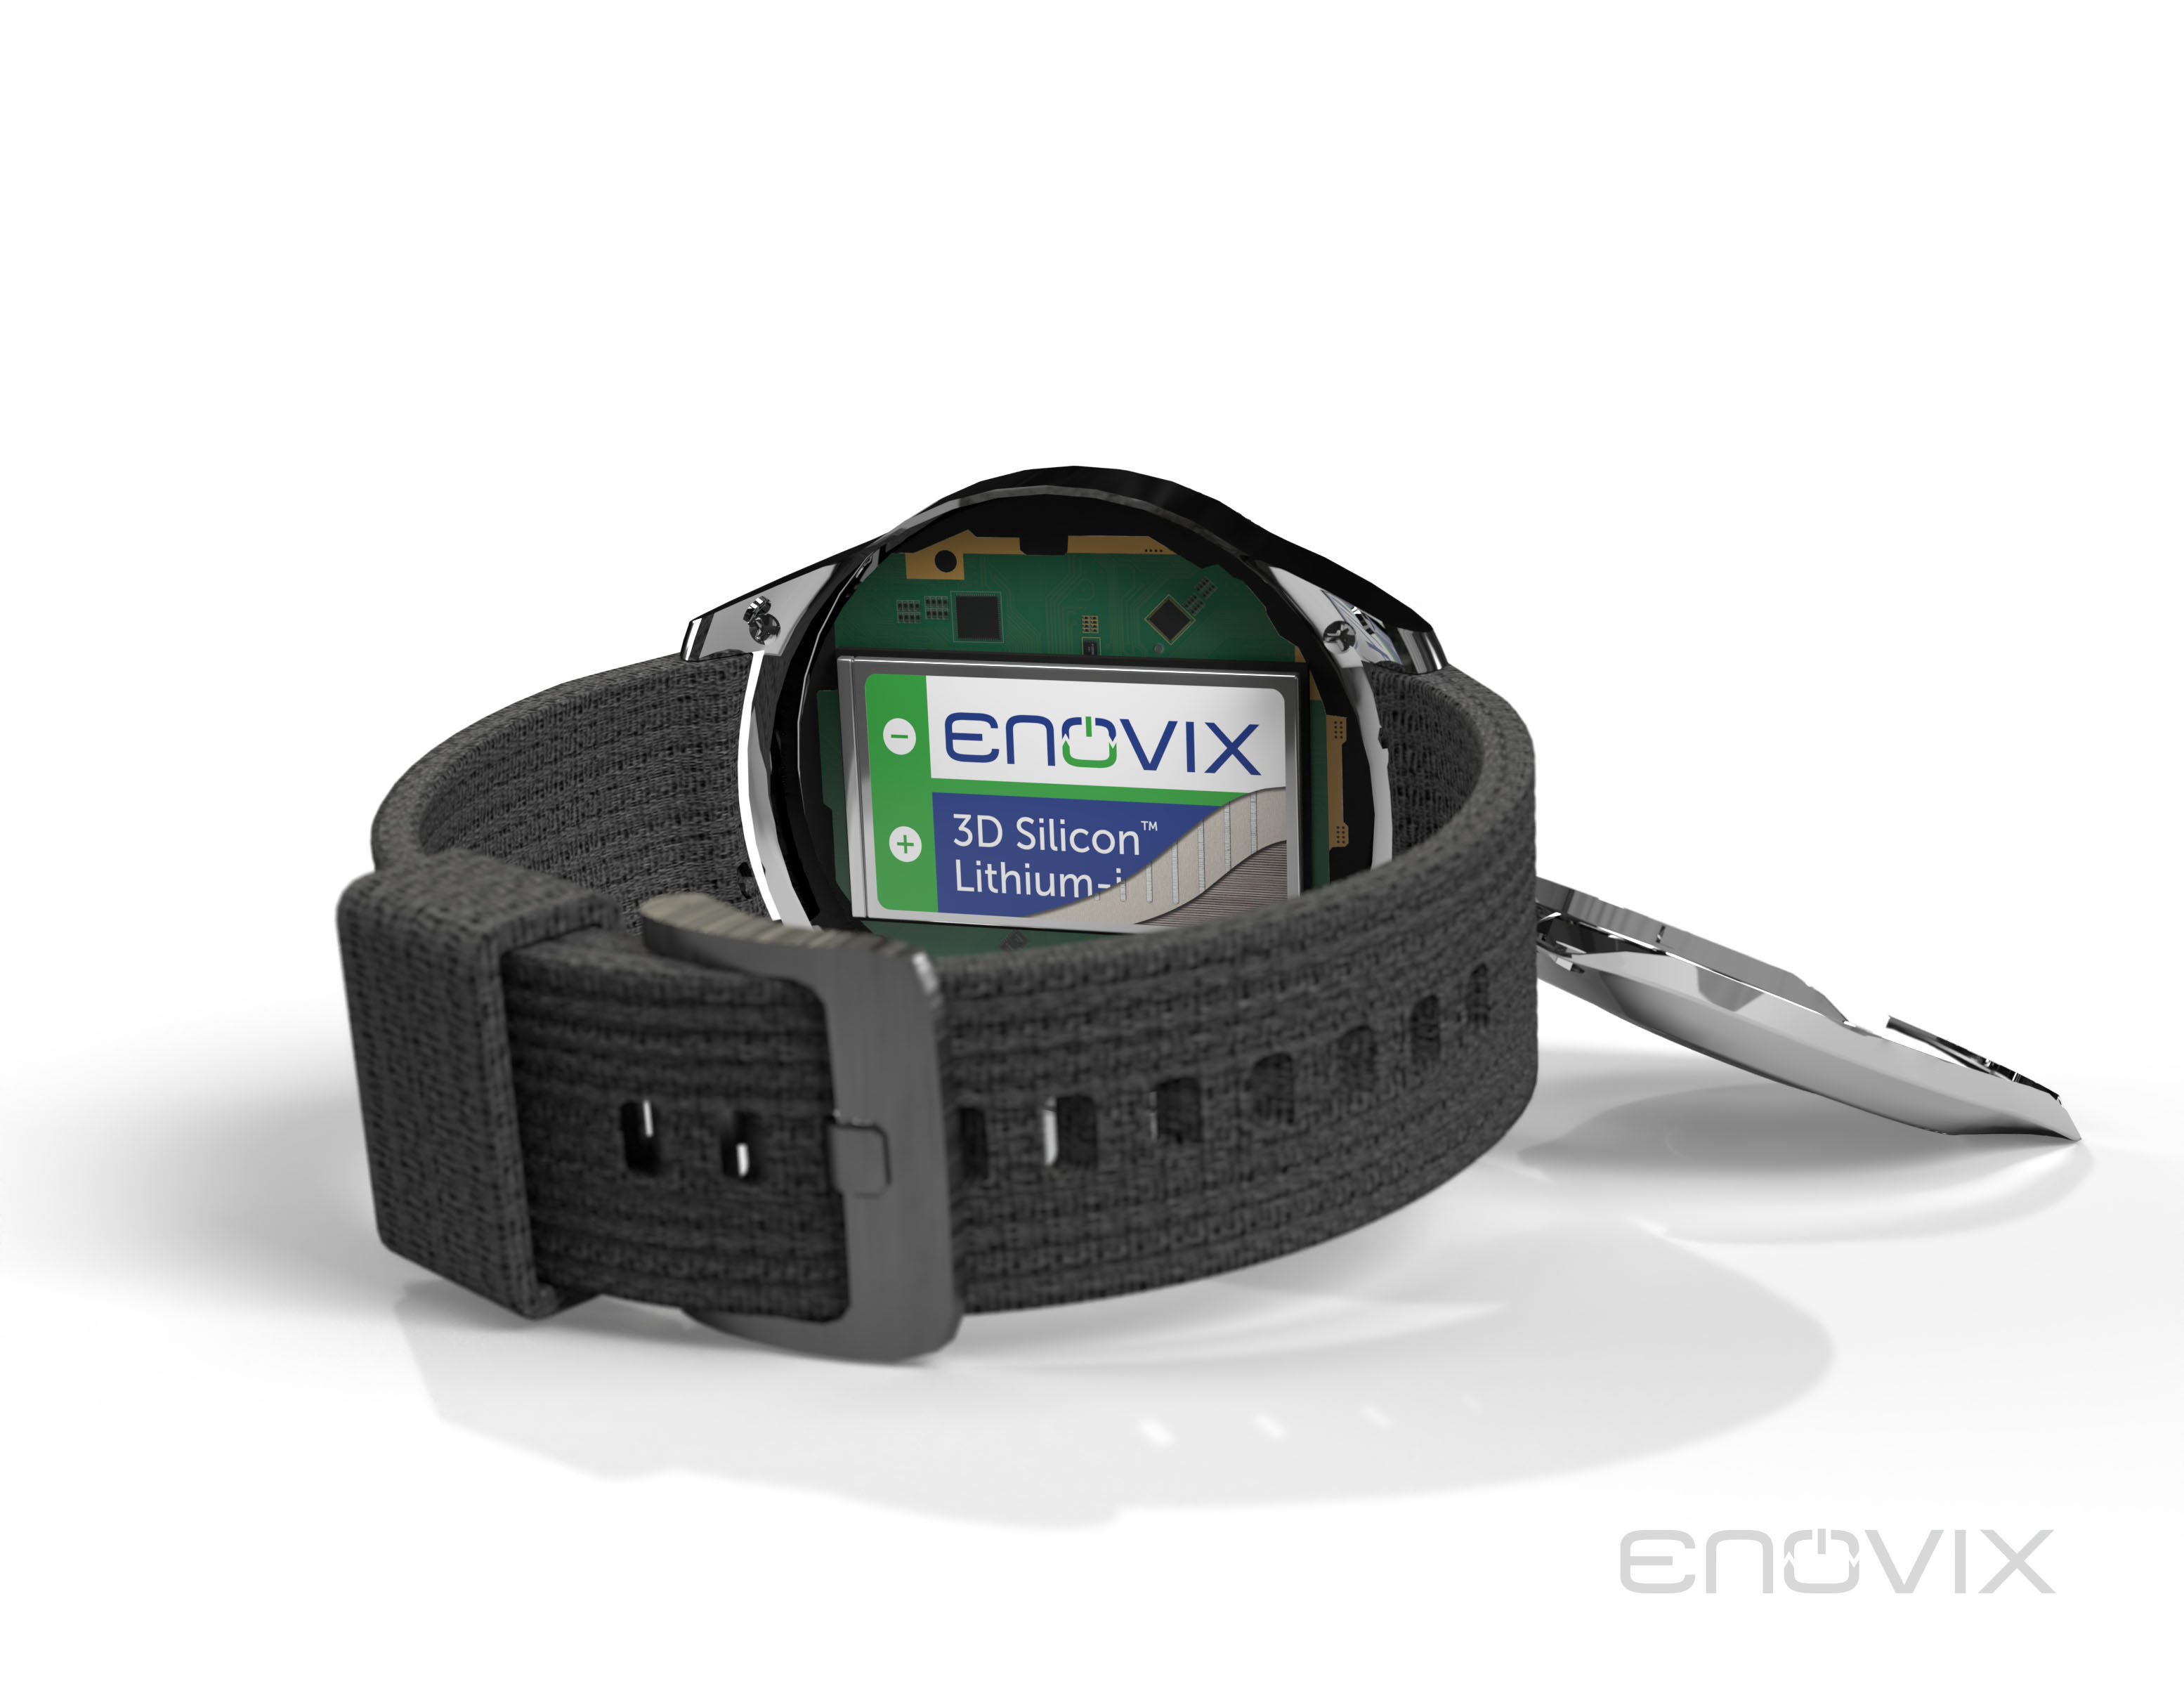 Enovix Corporation